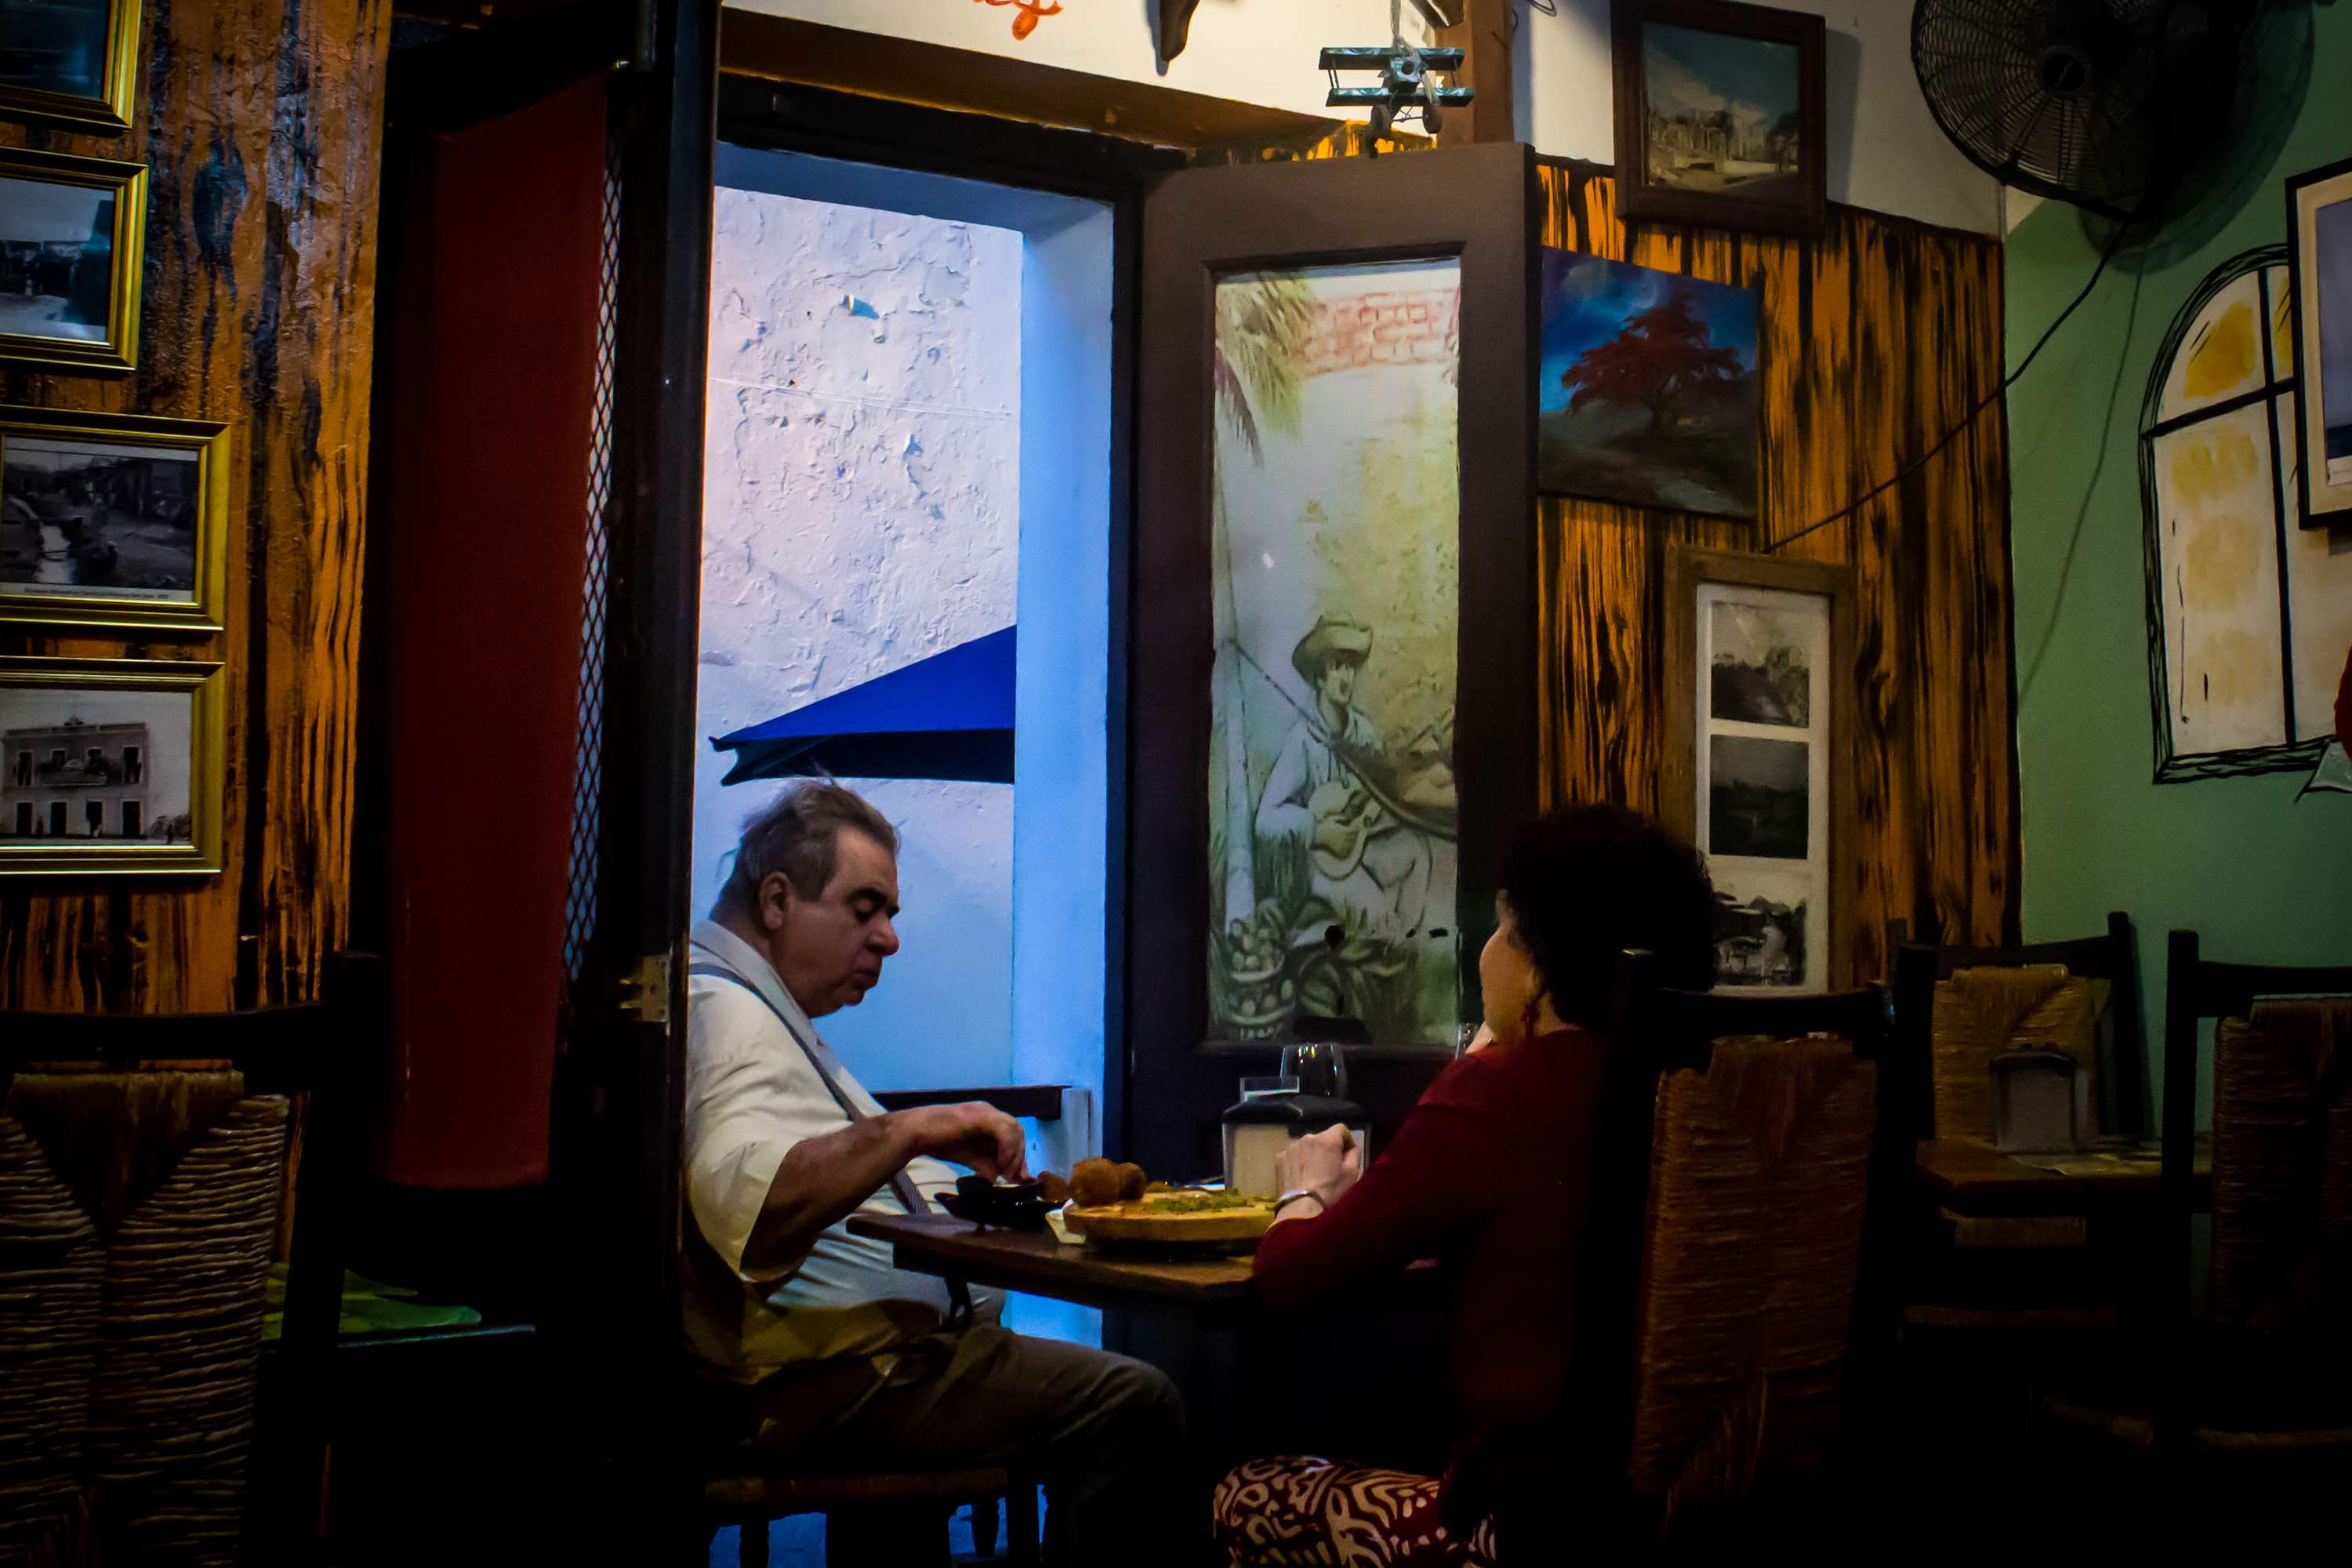 locals, old couple, people eating, san juan puerto rico, men